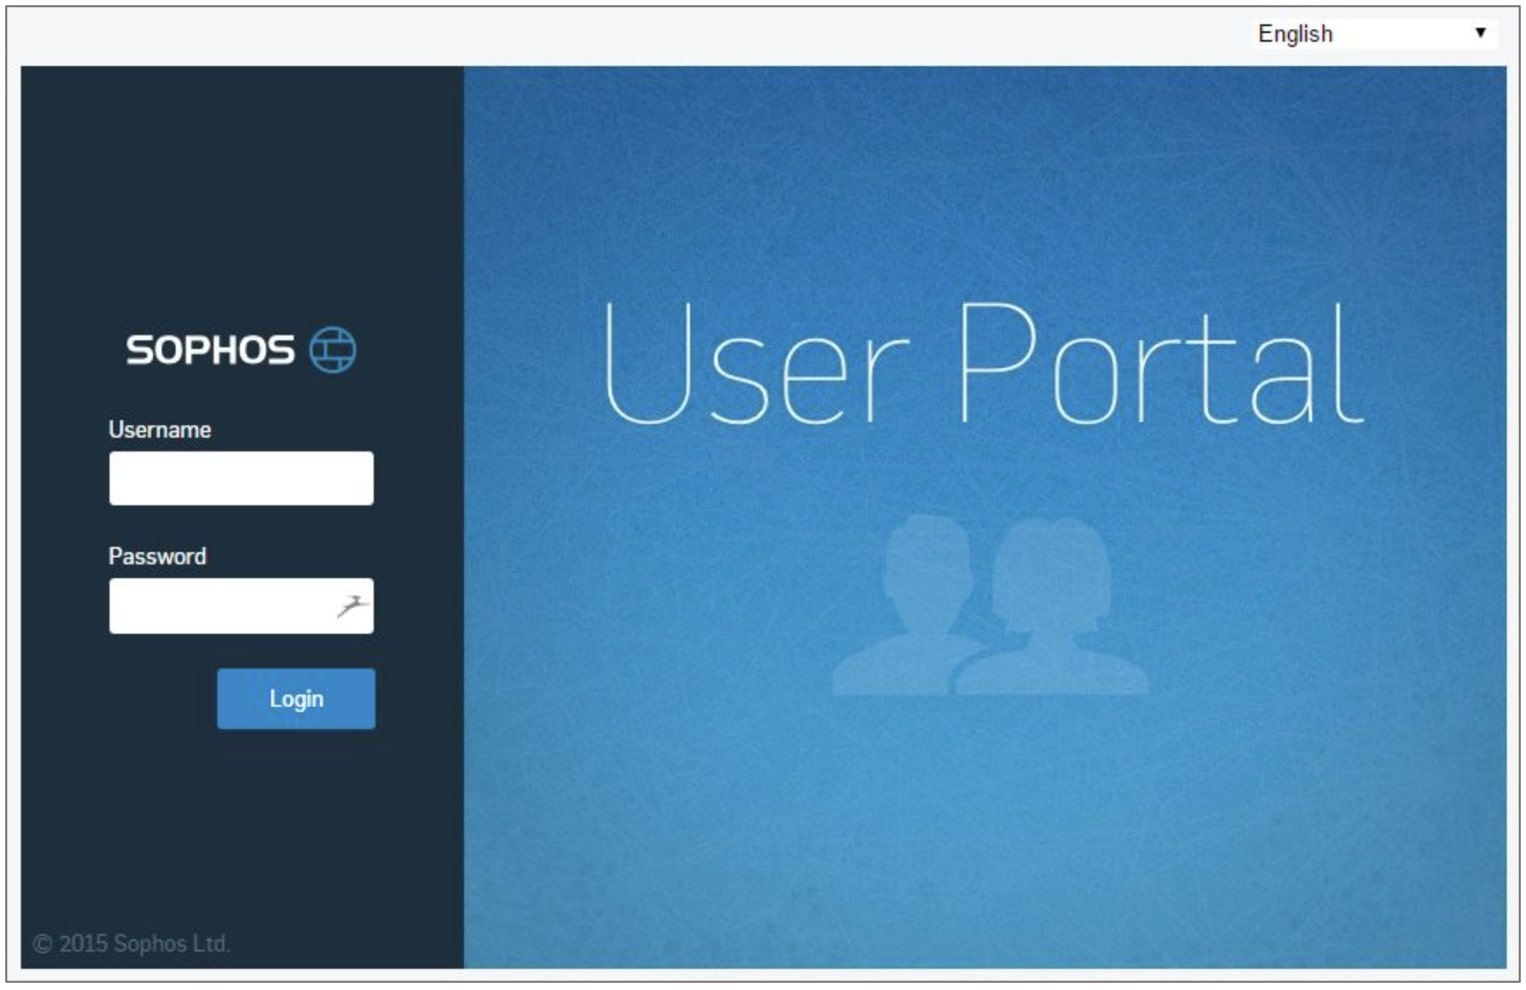 Sophos Firewall User Portal interface